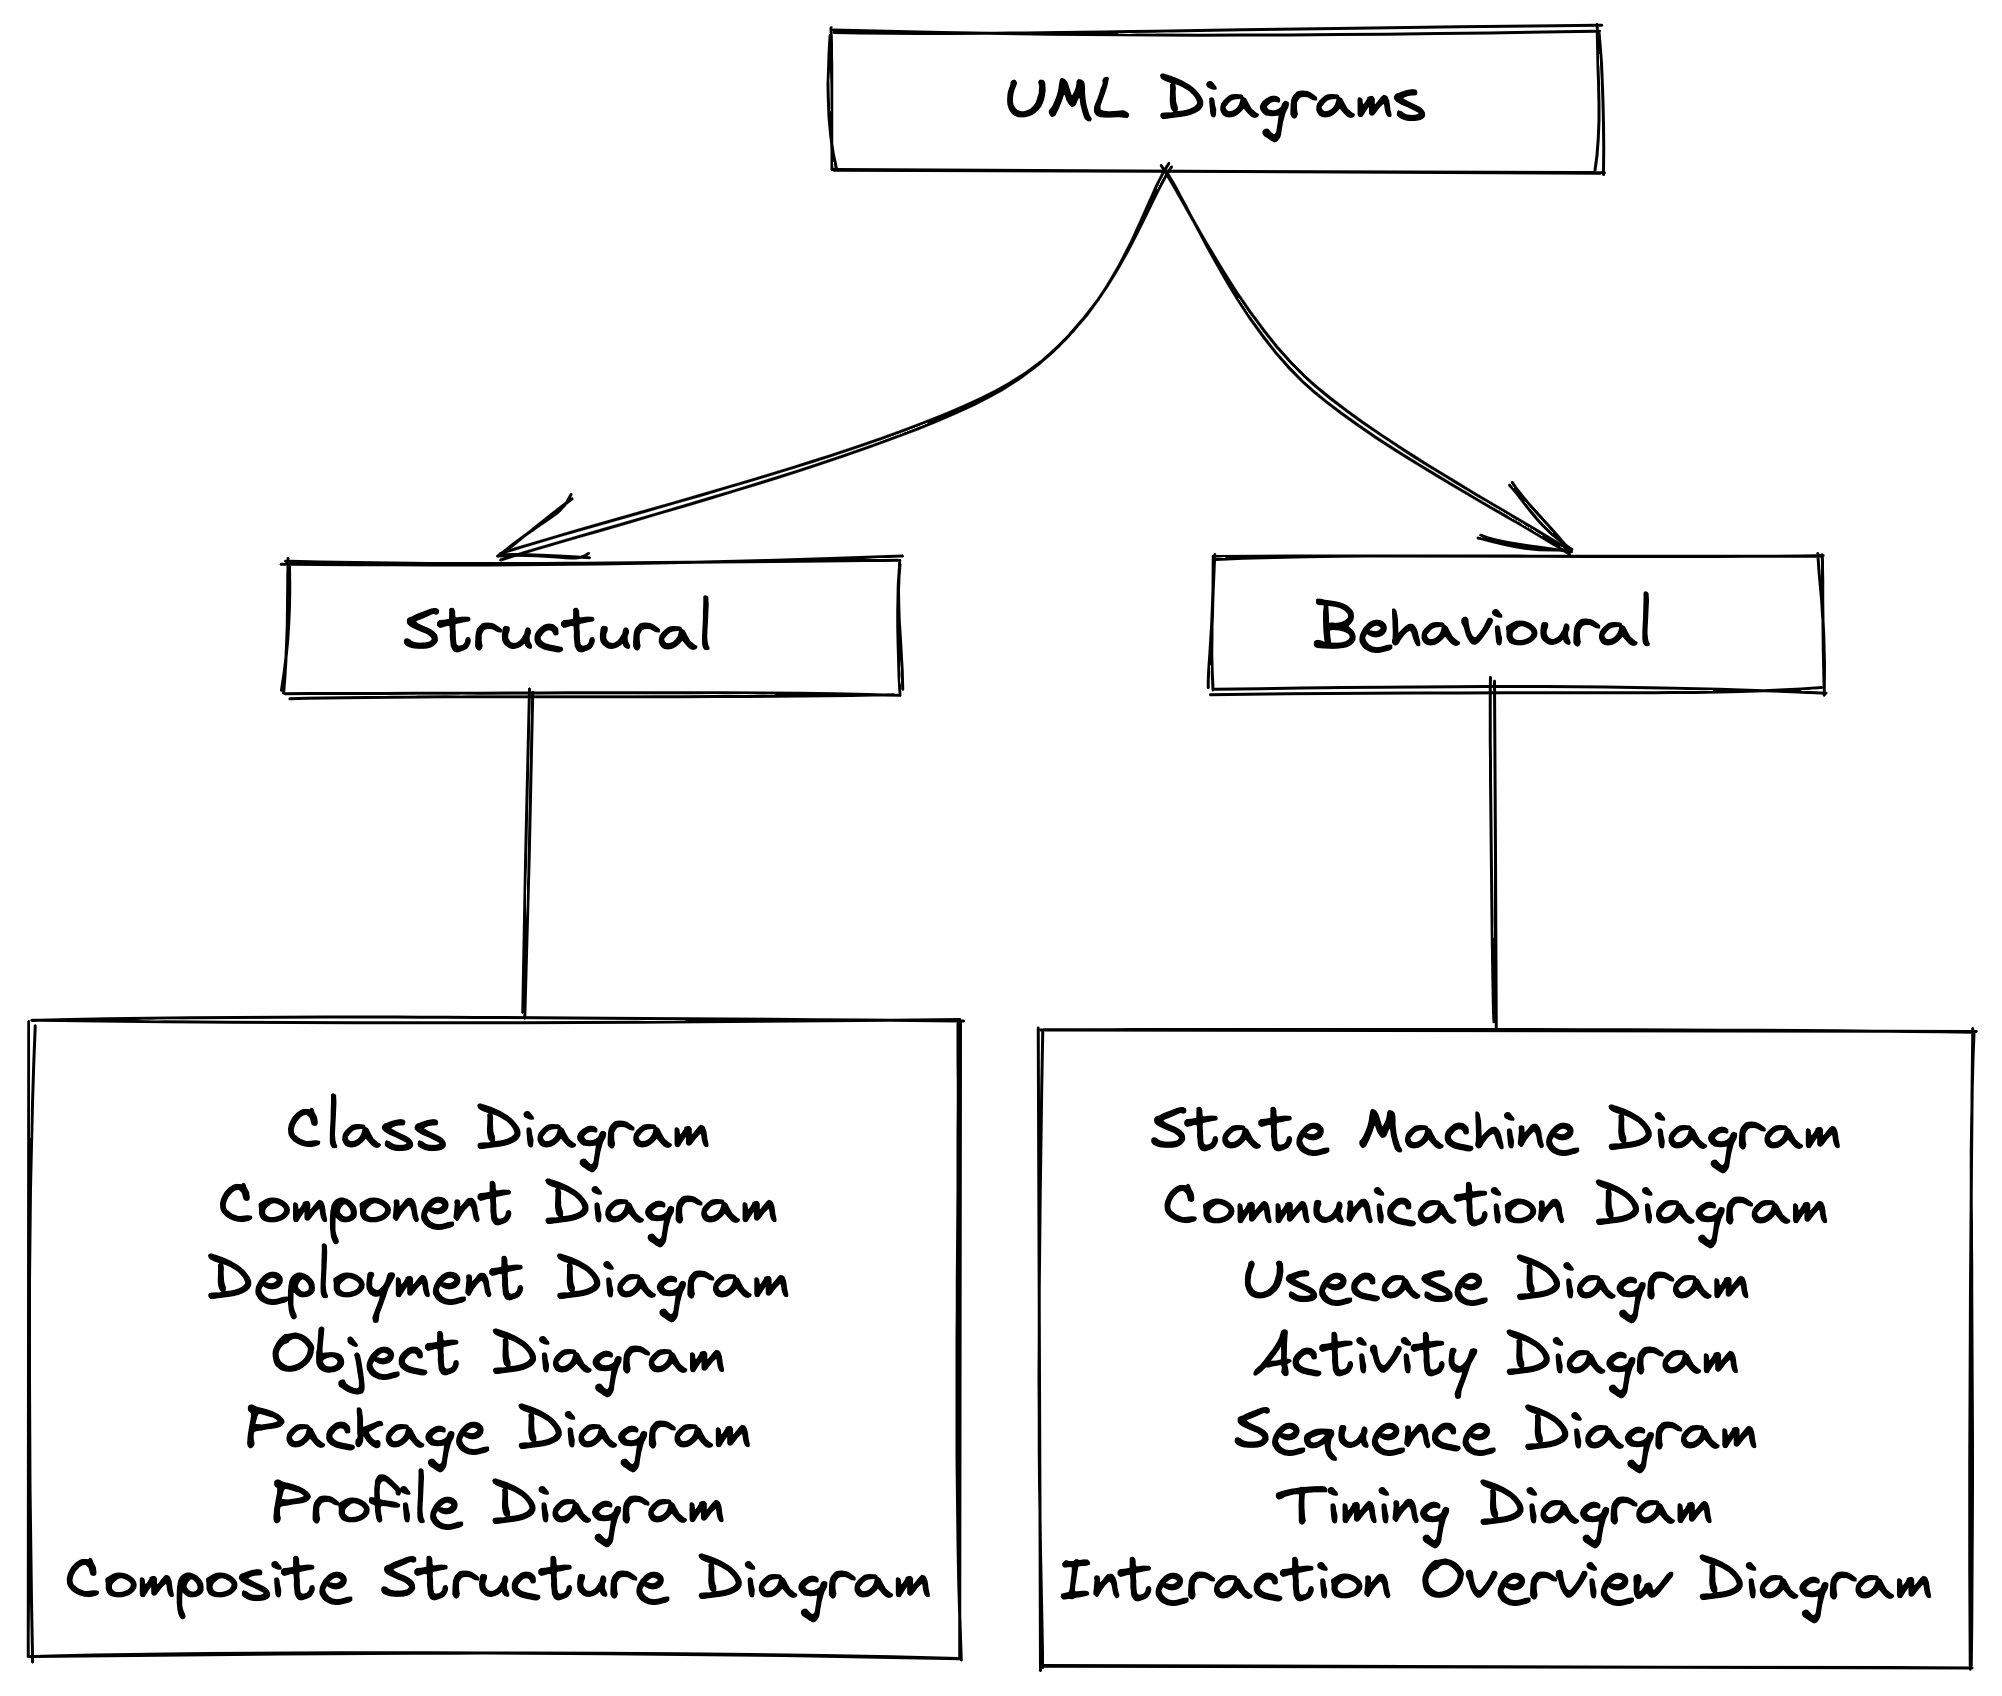 UML Diagrams Image